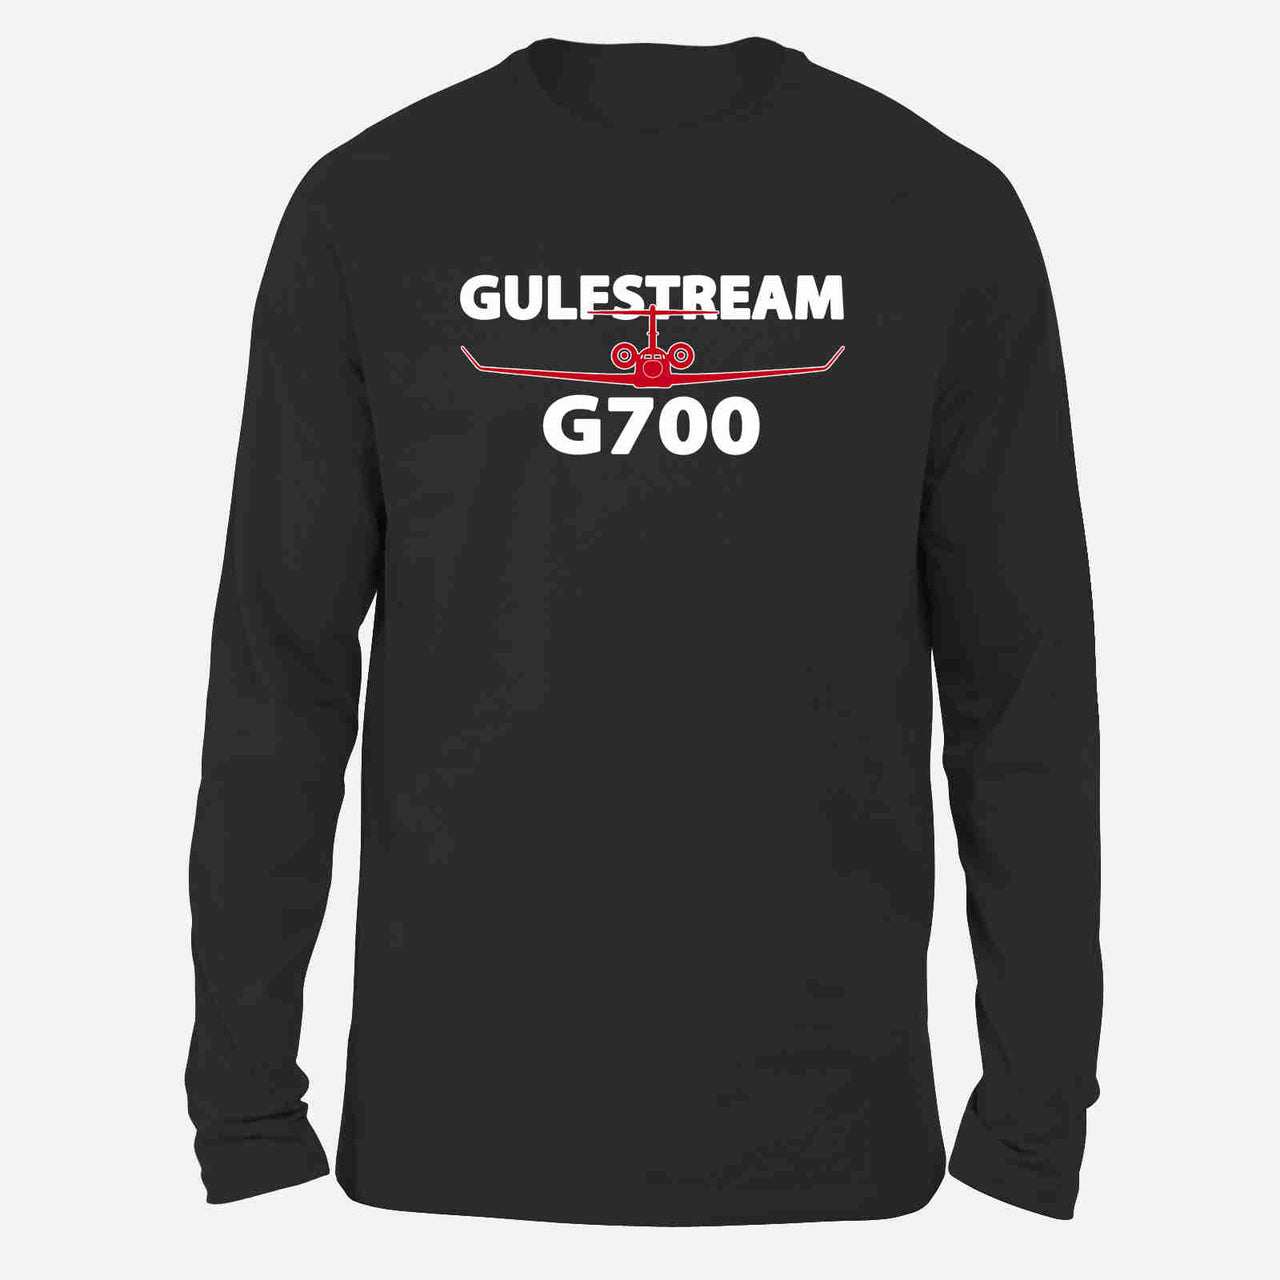 Amazing Gulfstream G700 Designed Long-Sleeve T-Shirts